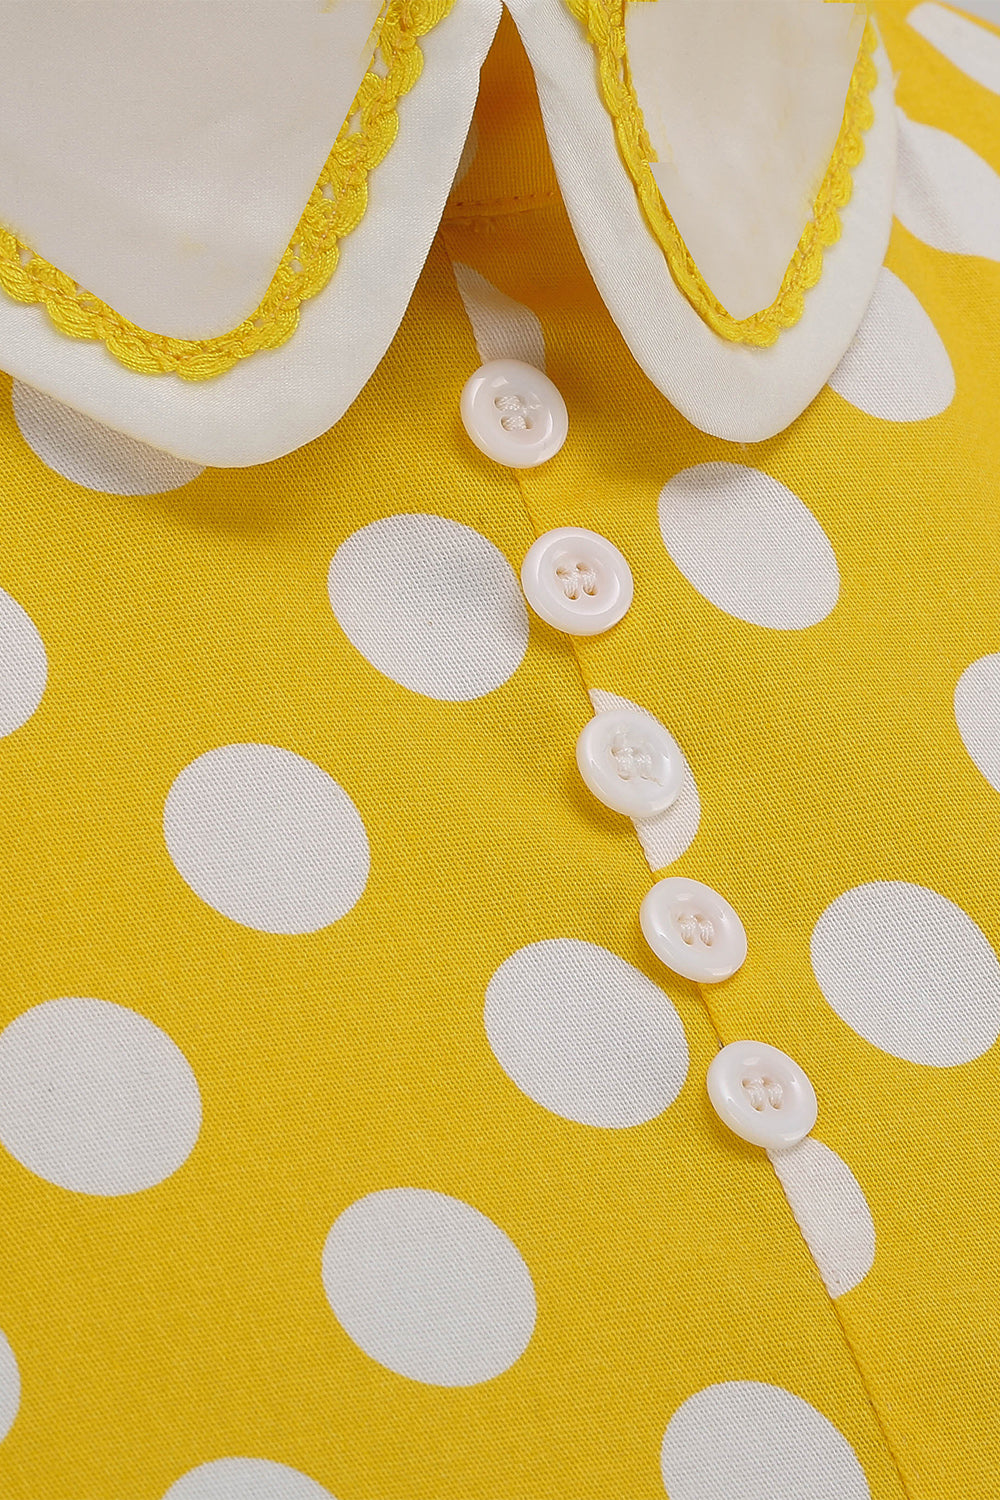 Yellow Polka Dots Spring 1950s Dress